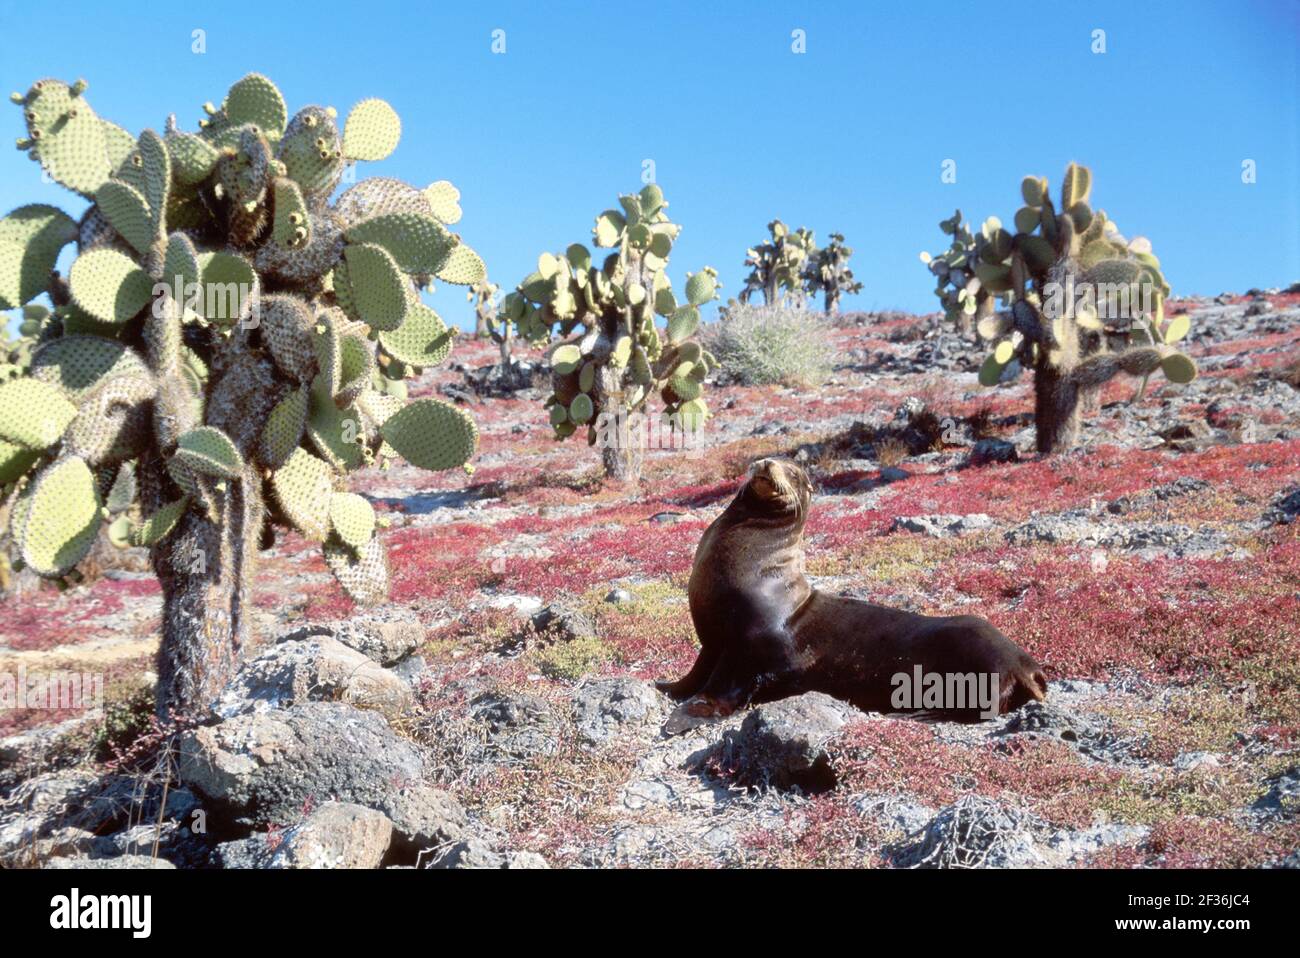 Islas Galápagos Isla South Plaza Ecuador Ecuatoriano América del Sur América, cactus toro macho león marino rojo sessuvium estación seca, Foto de stock